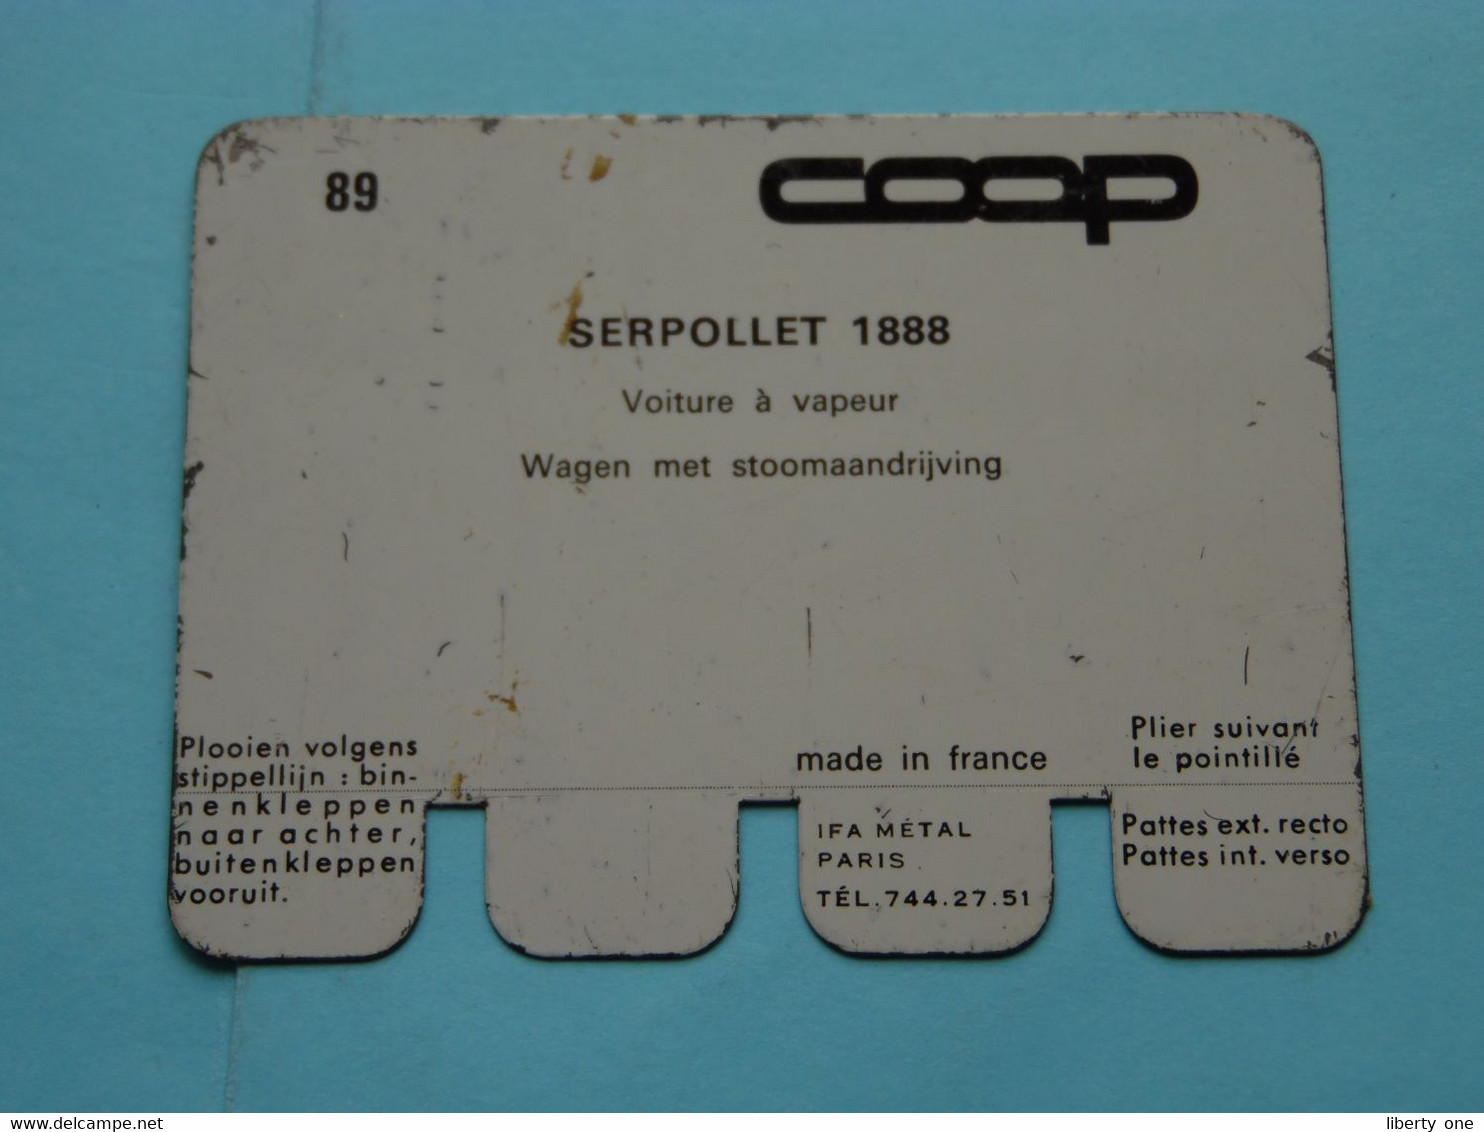 SERPOLLET 1888 - Coll. N° 89 NL/FR ( Plaquette C O O P - Voir Photo - IFA Metal Paris ) ! - Blechschilder (ab 1960)